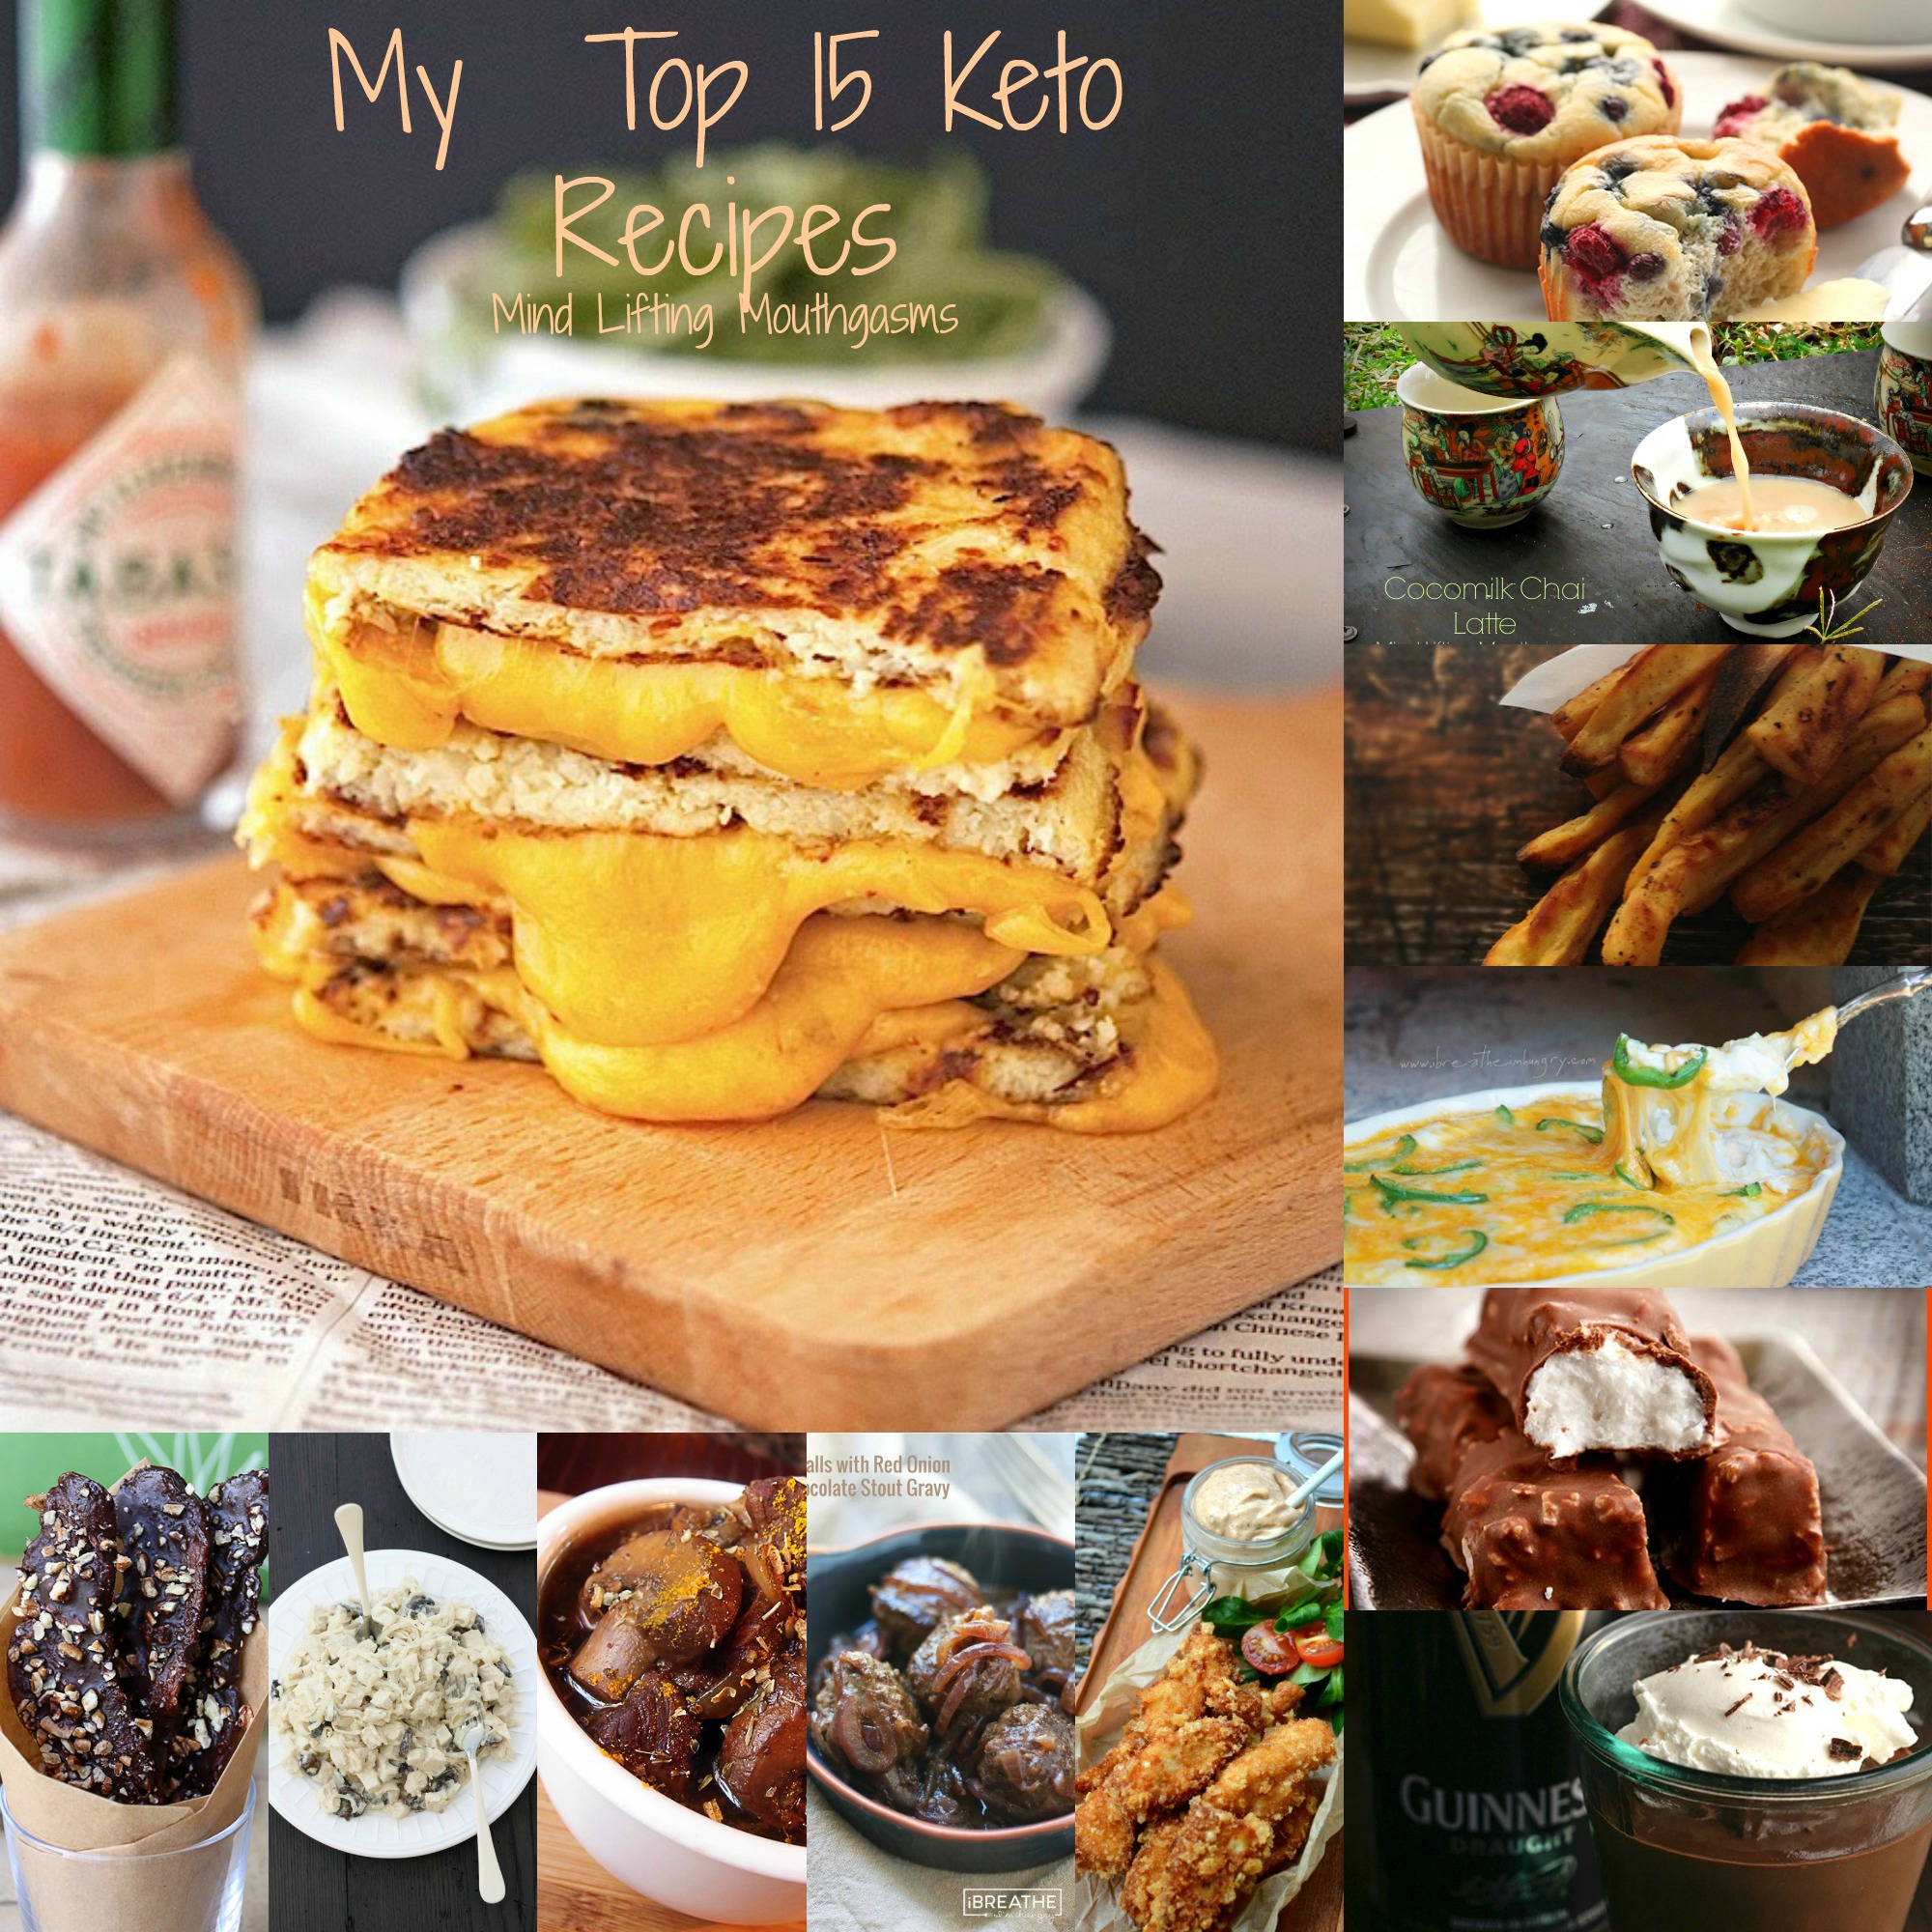 My Top 15 Keto Recipes.jpg